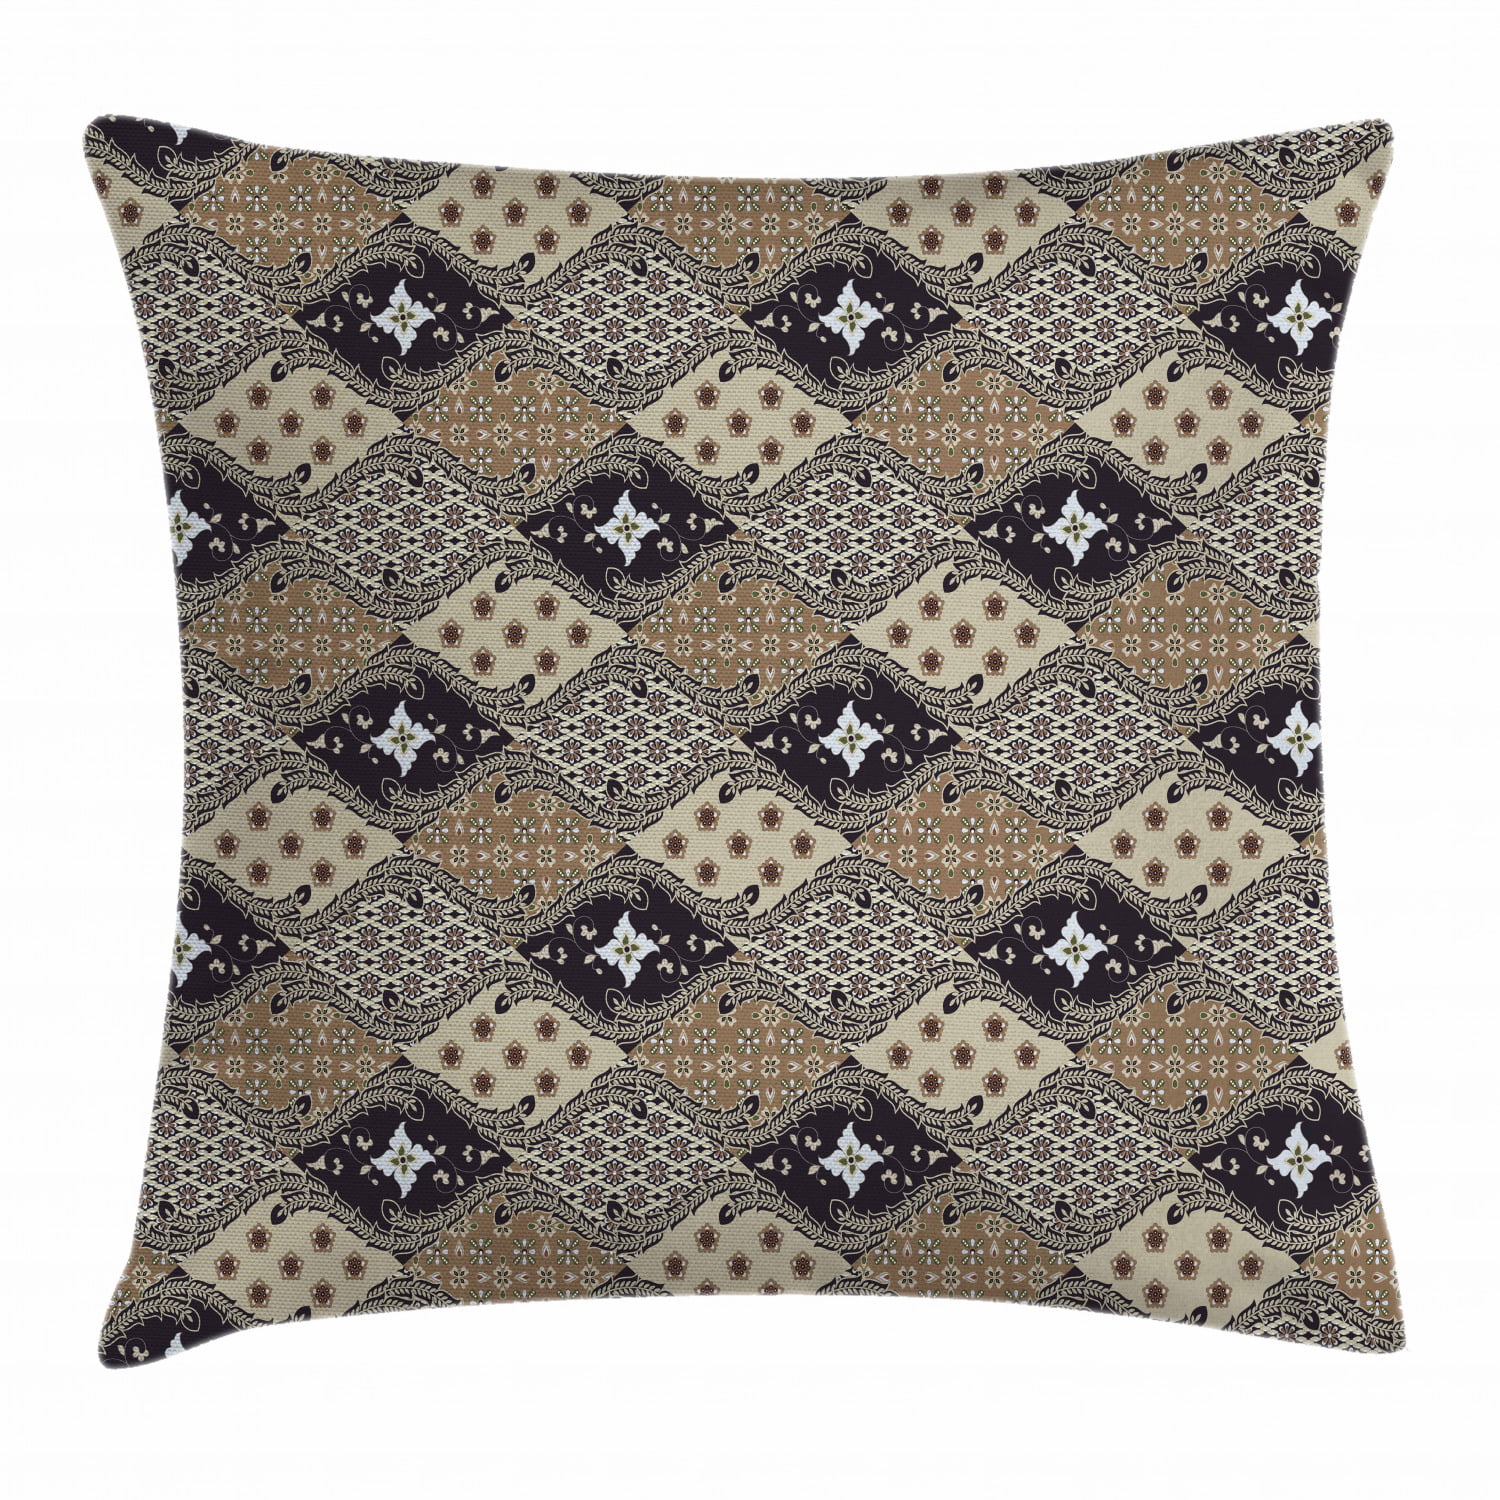 Global Style Décor African Floral Batik Pillow Cover African Pillows Ankara Wax Prints Ansura Boho Pillows